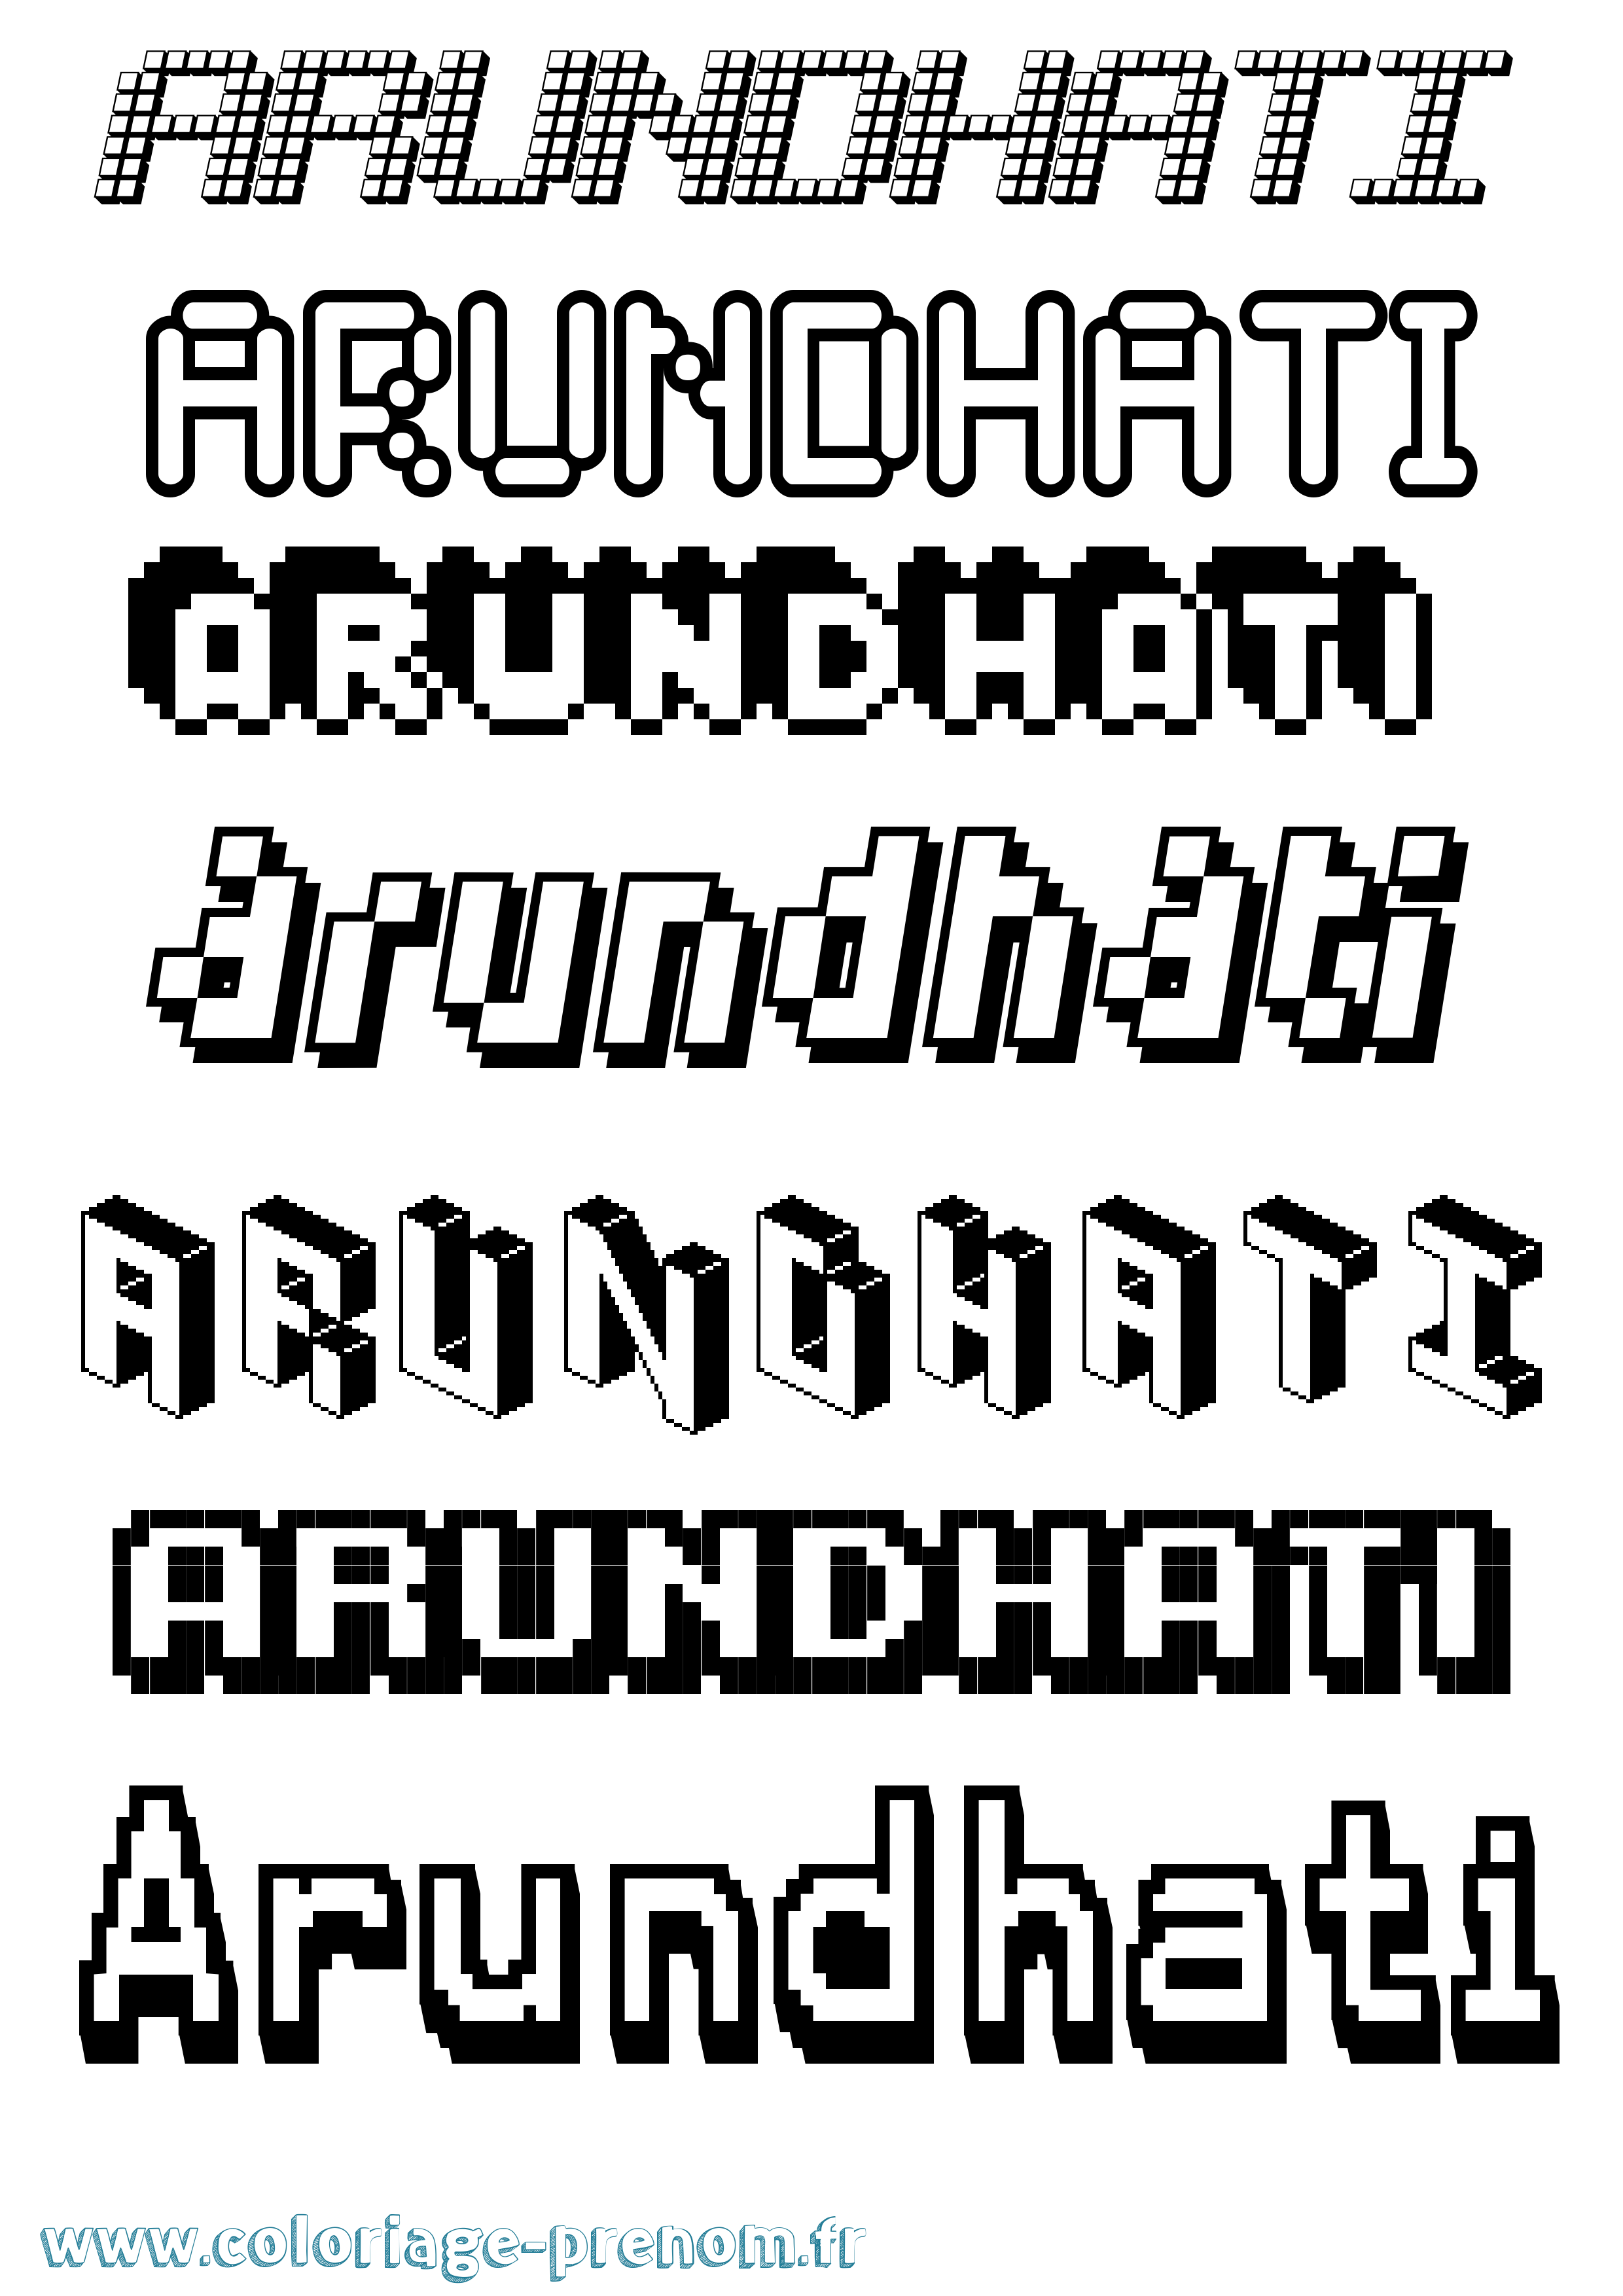 Coloriage prénom Arundhati Pixel